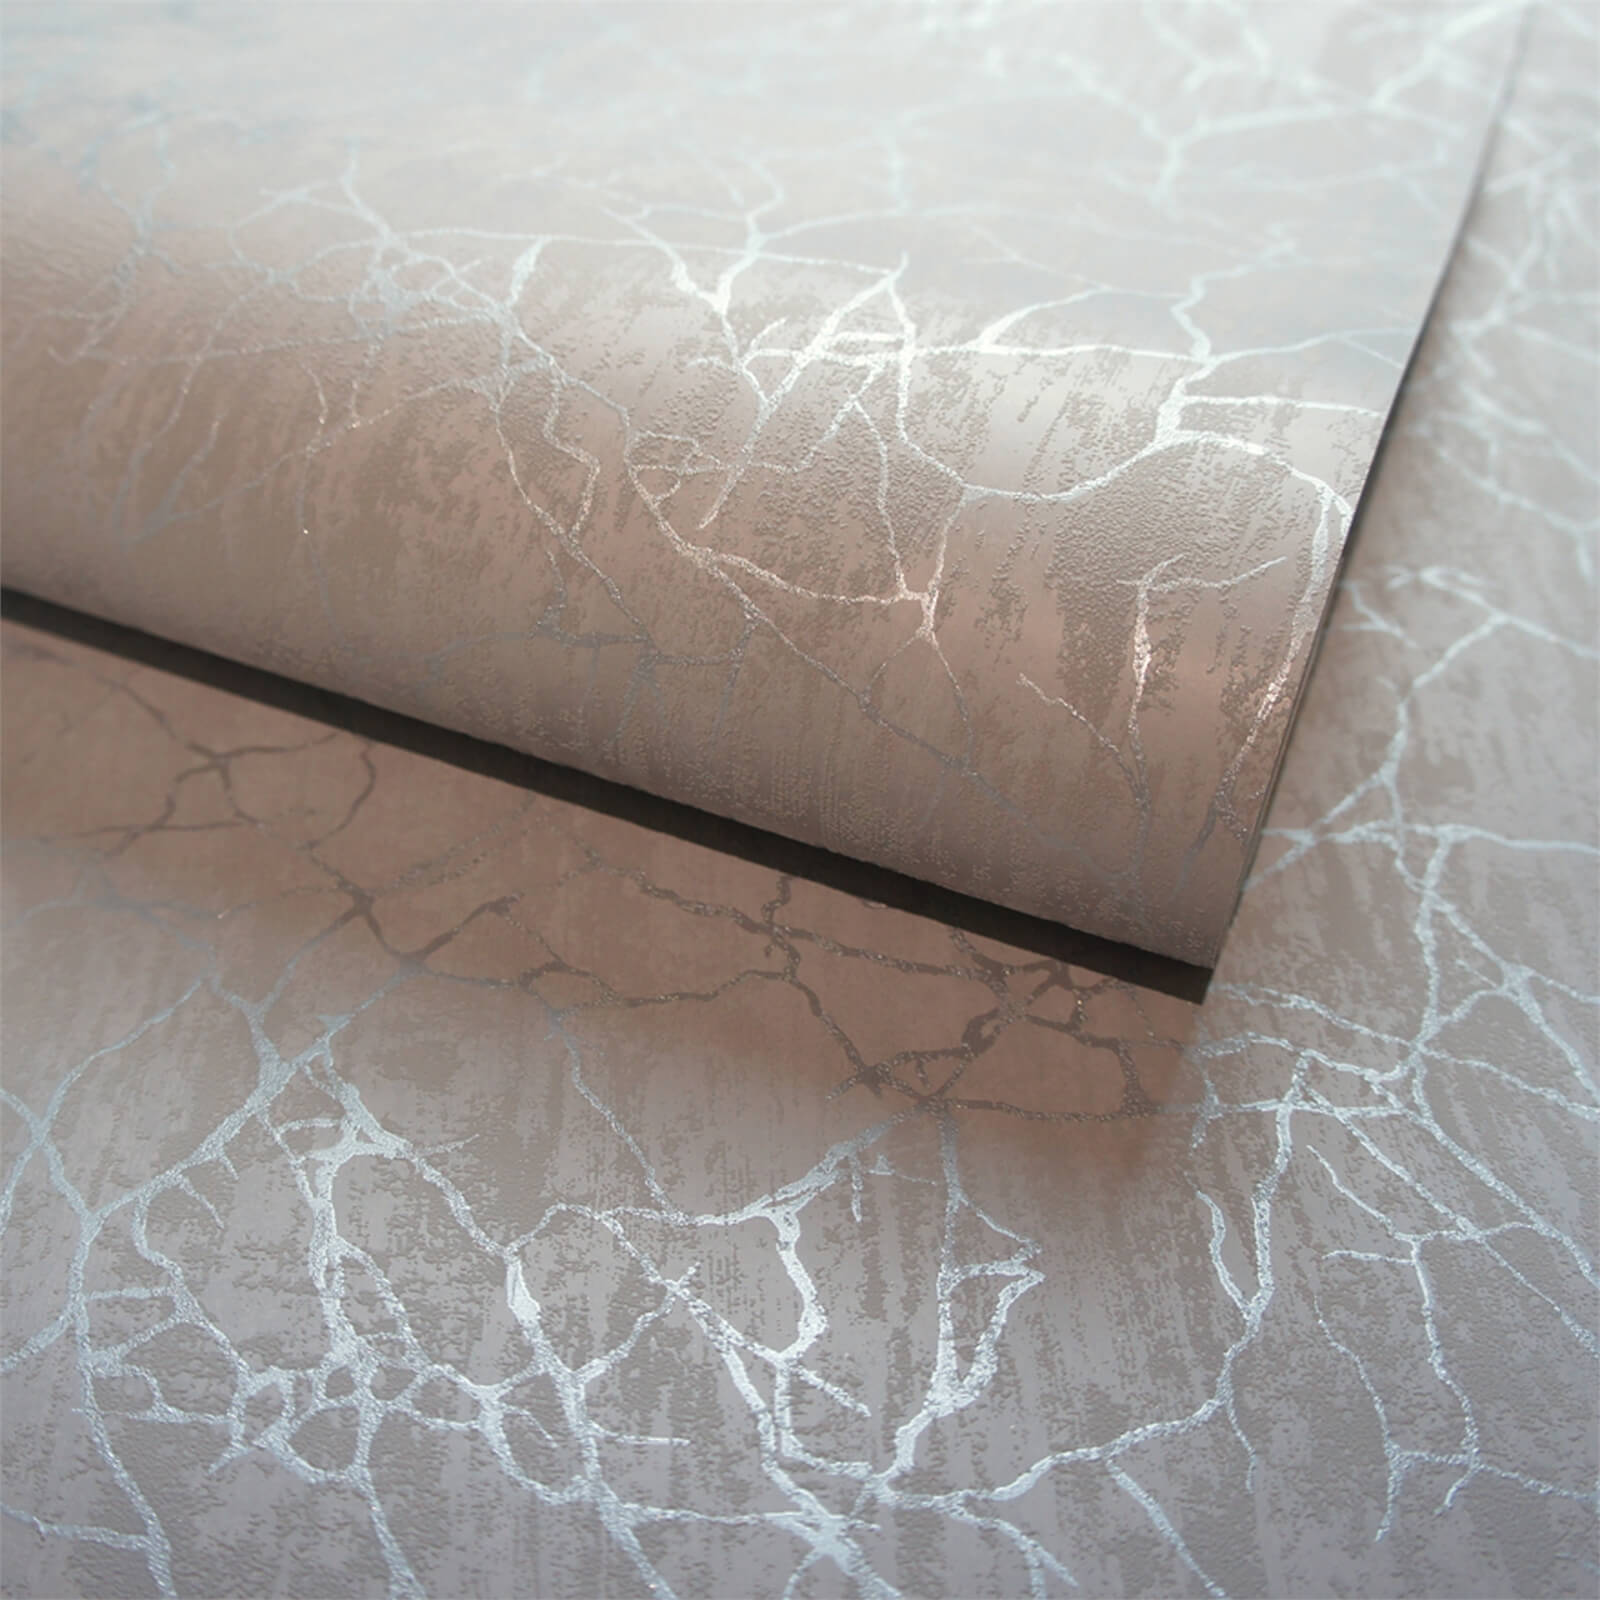 Holden Decor Midas Plain Marble Textured Metallic Grey Wallpaper